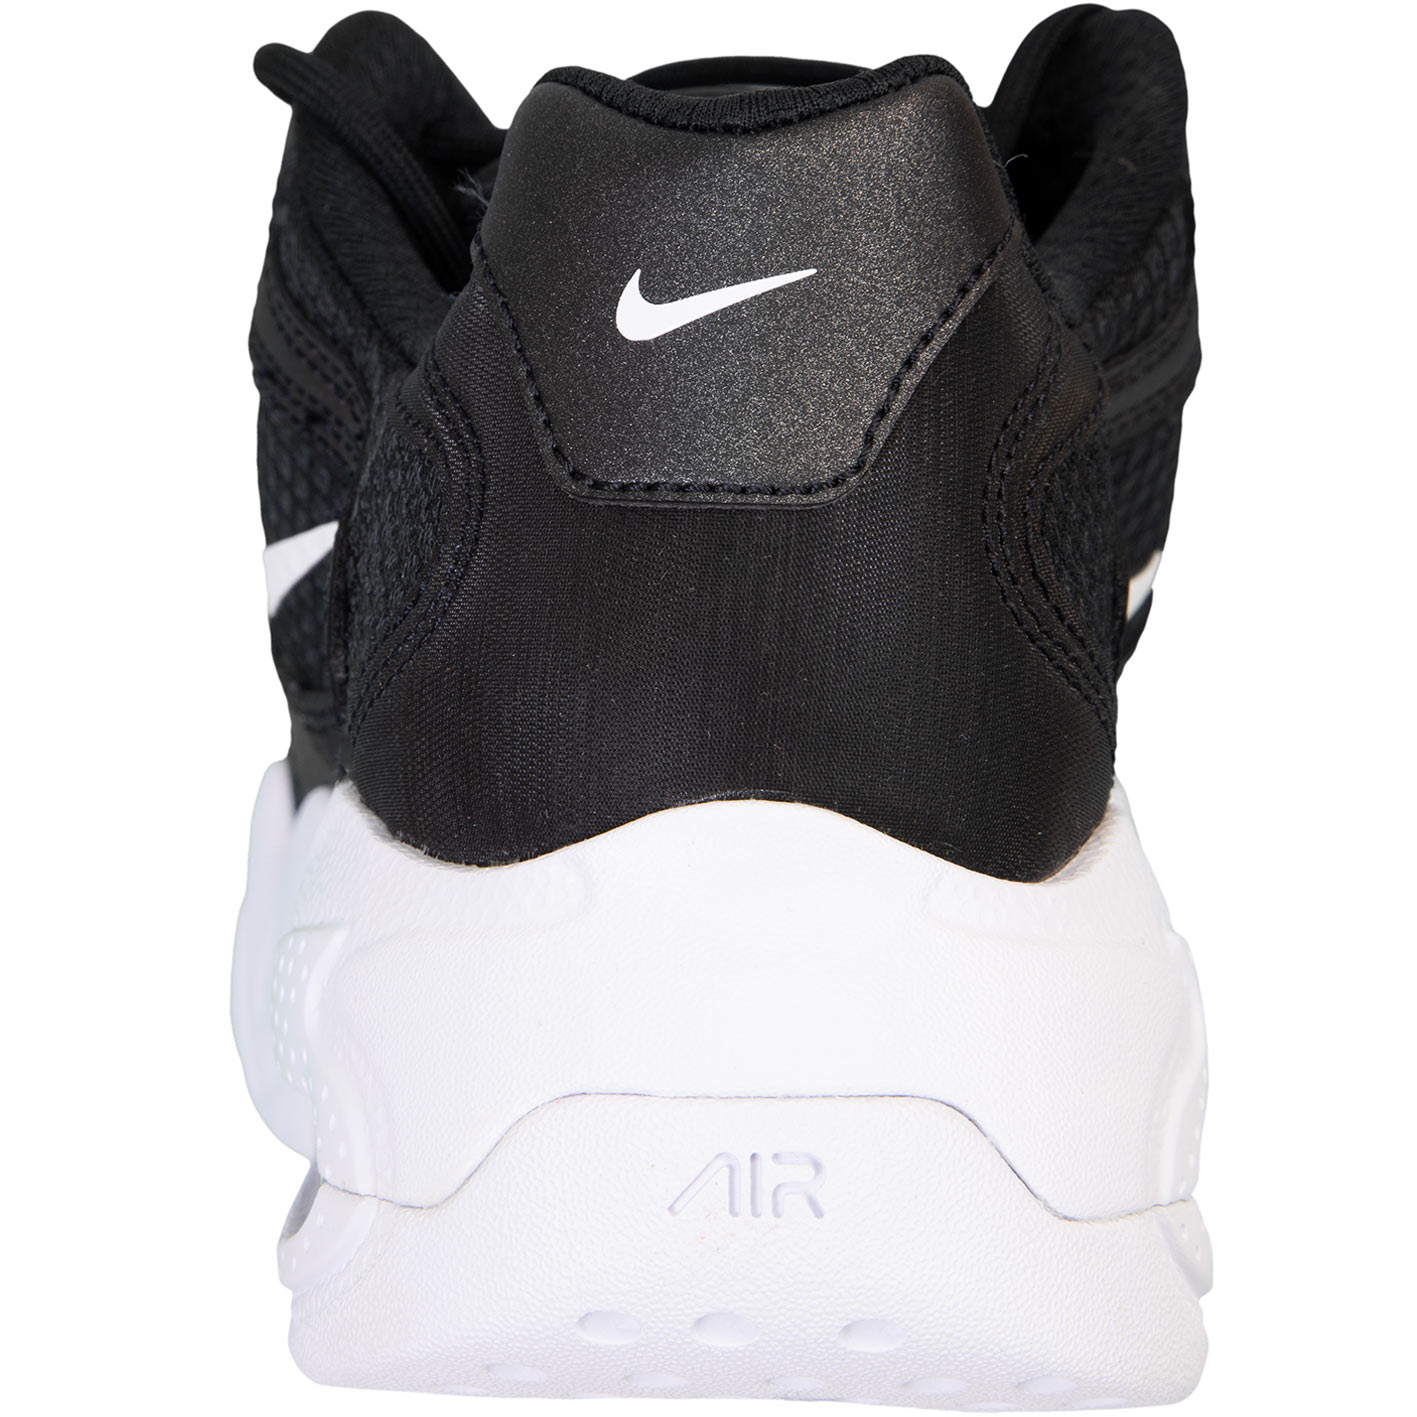 ☆ Nike Air 2X Damen Sneaker Schuhe schwarz/weiß - hier bestellen!